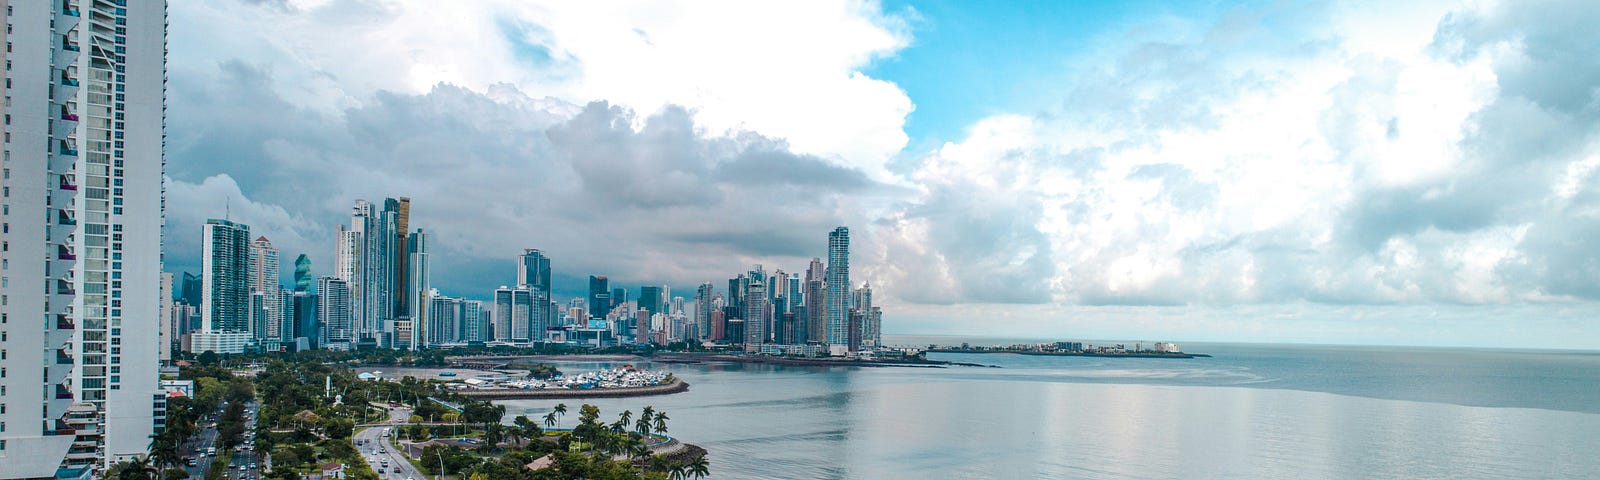 Panama City Panama Coastline